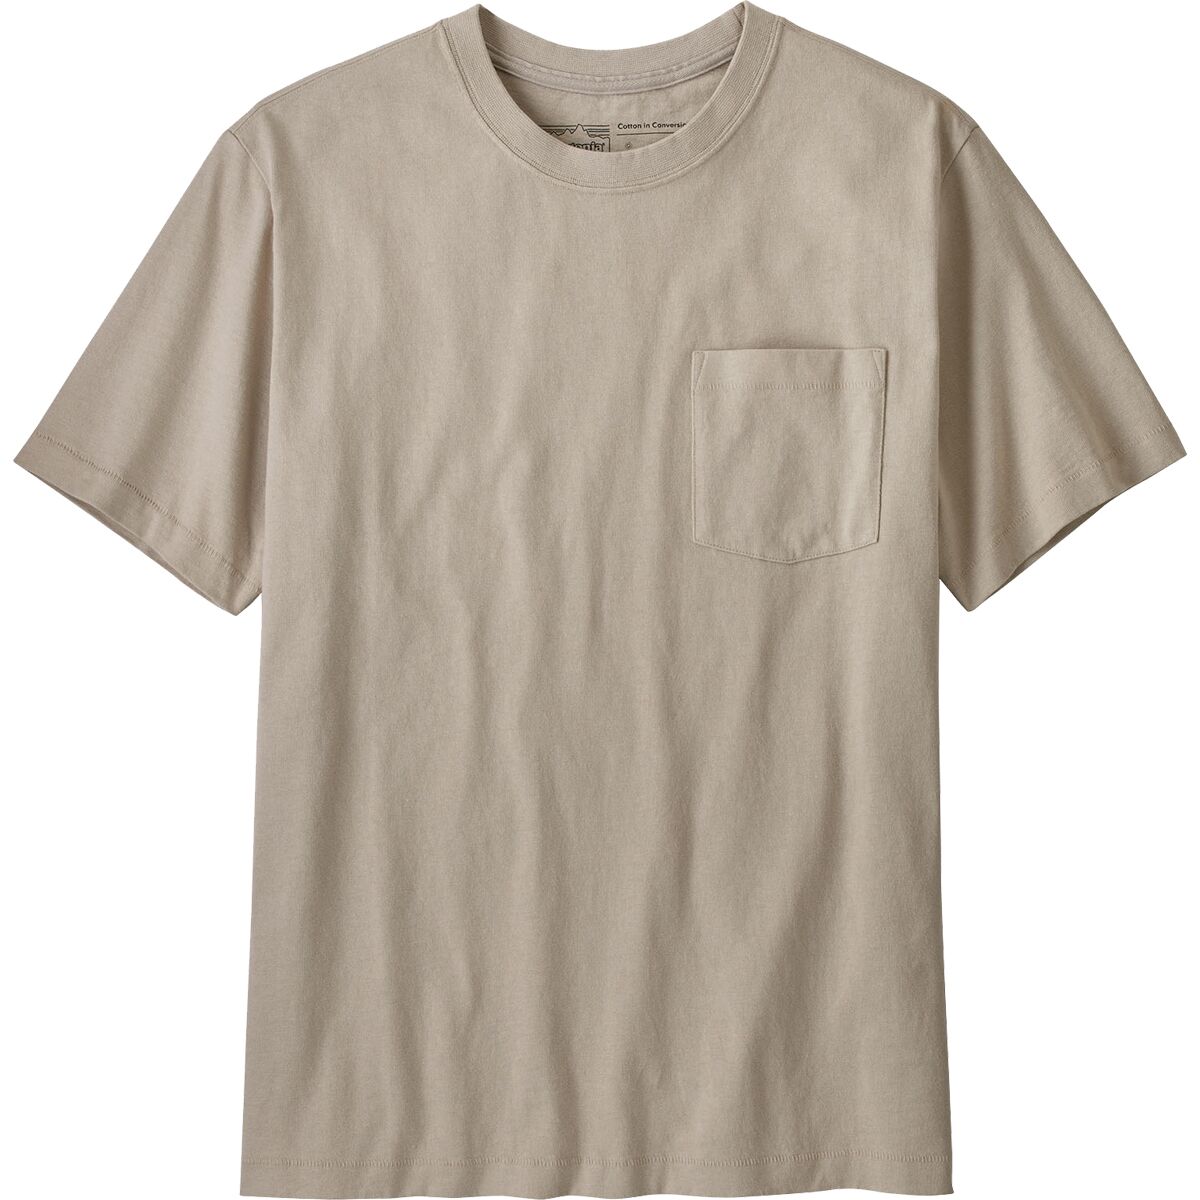 Patagonia Cotton in Conversion Midweight Pocket T-Shirt - Men's